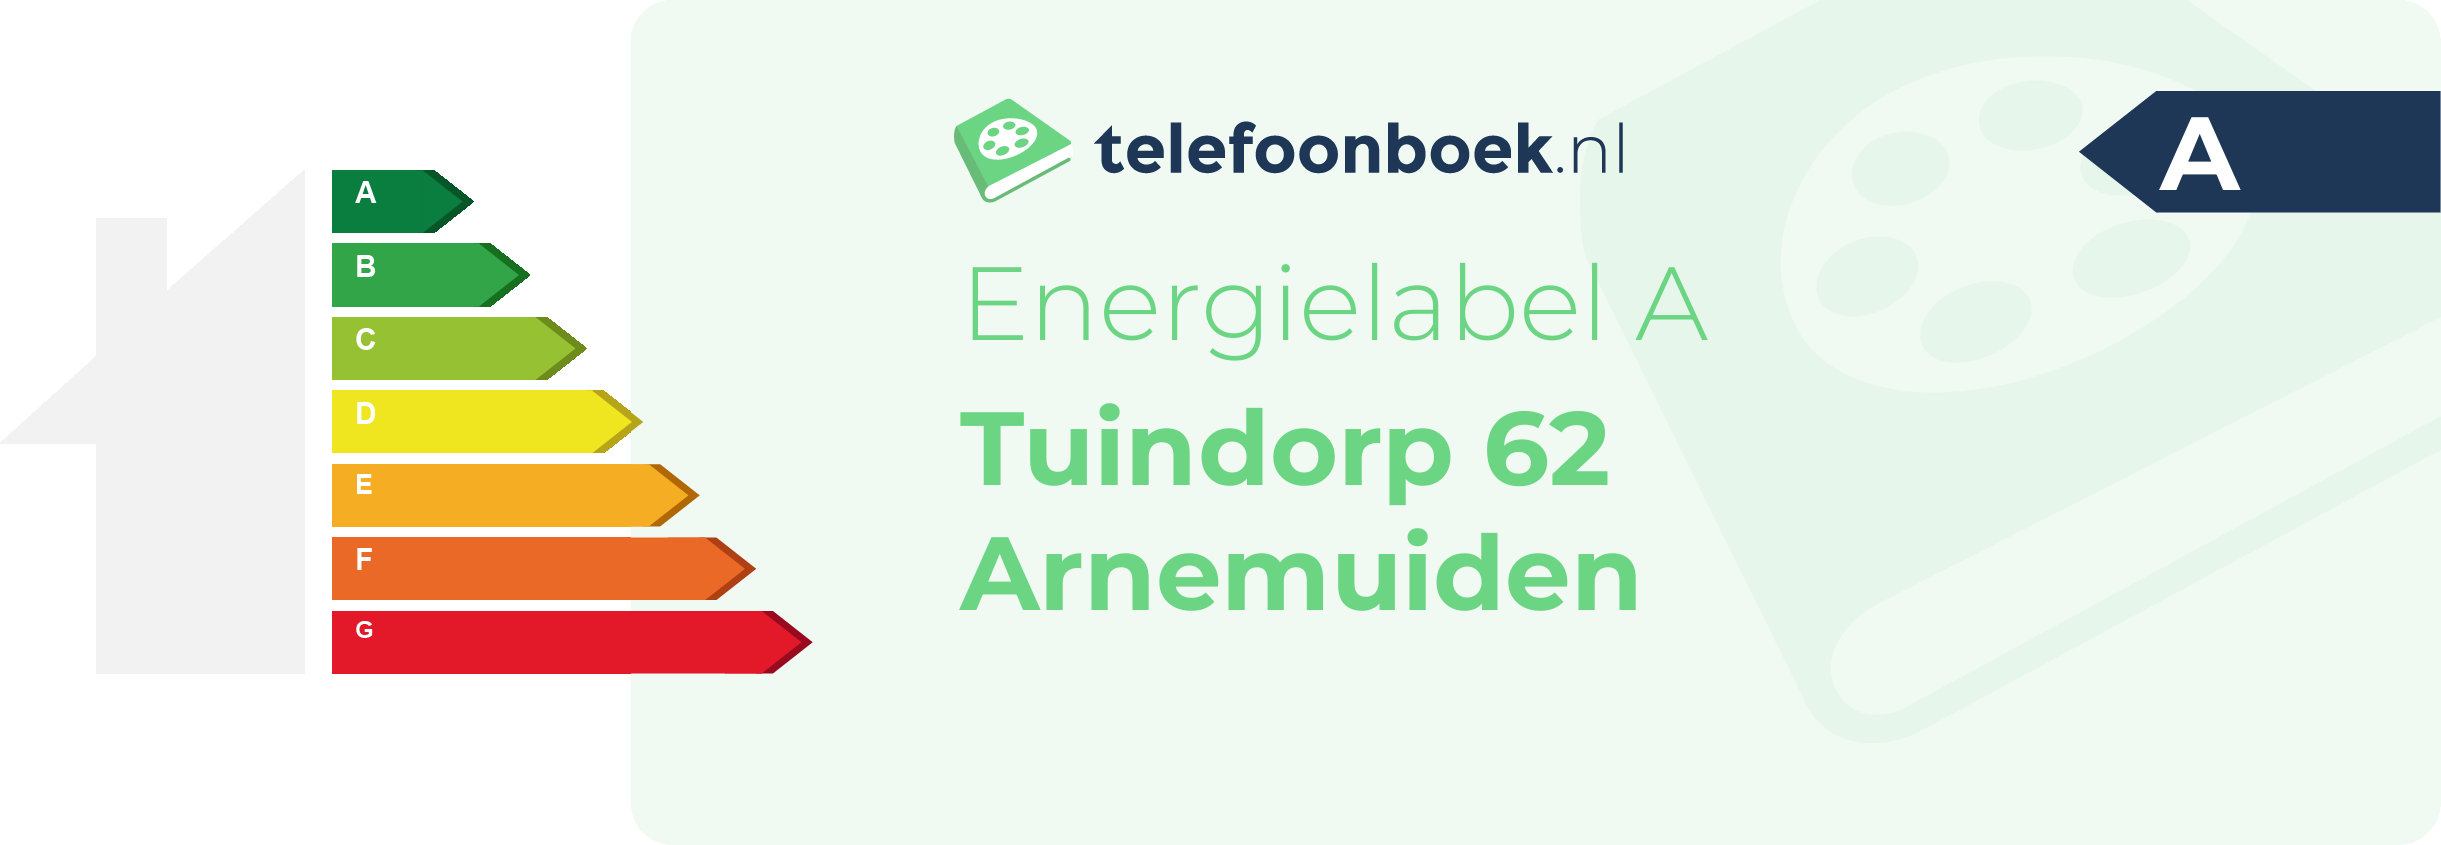 Energielabel Tuindorp 62 Arnemuiden